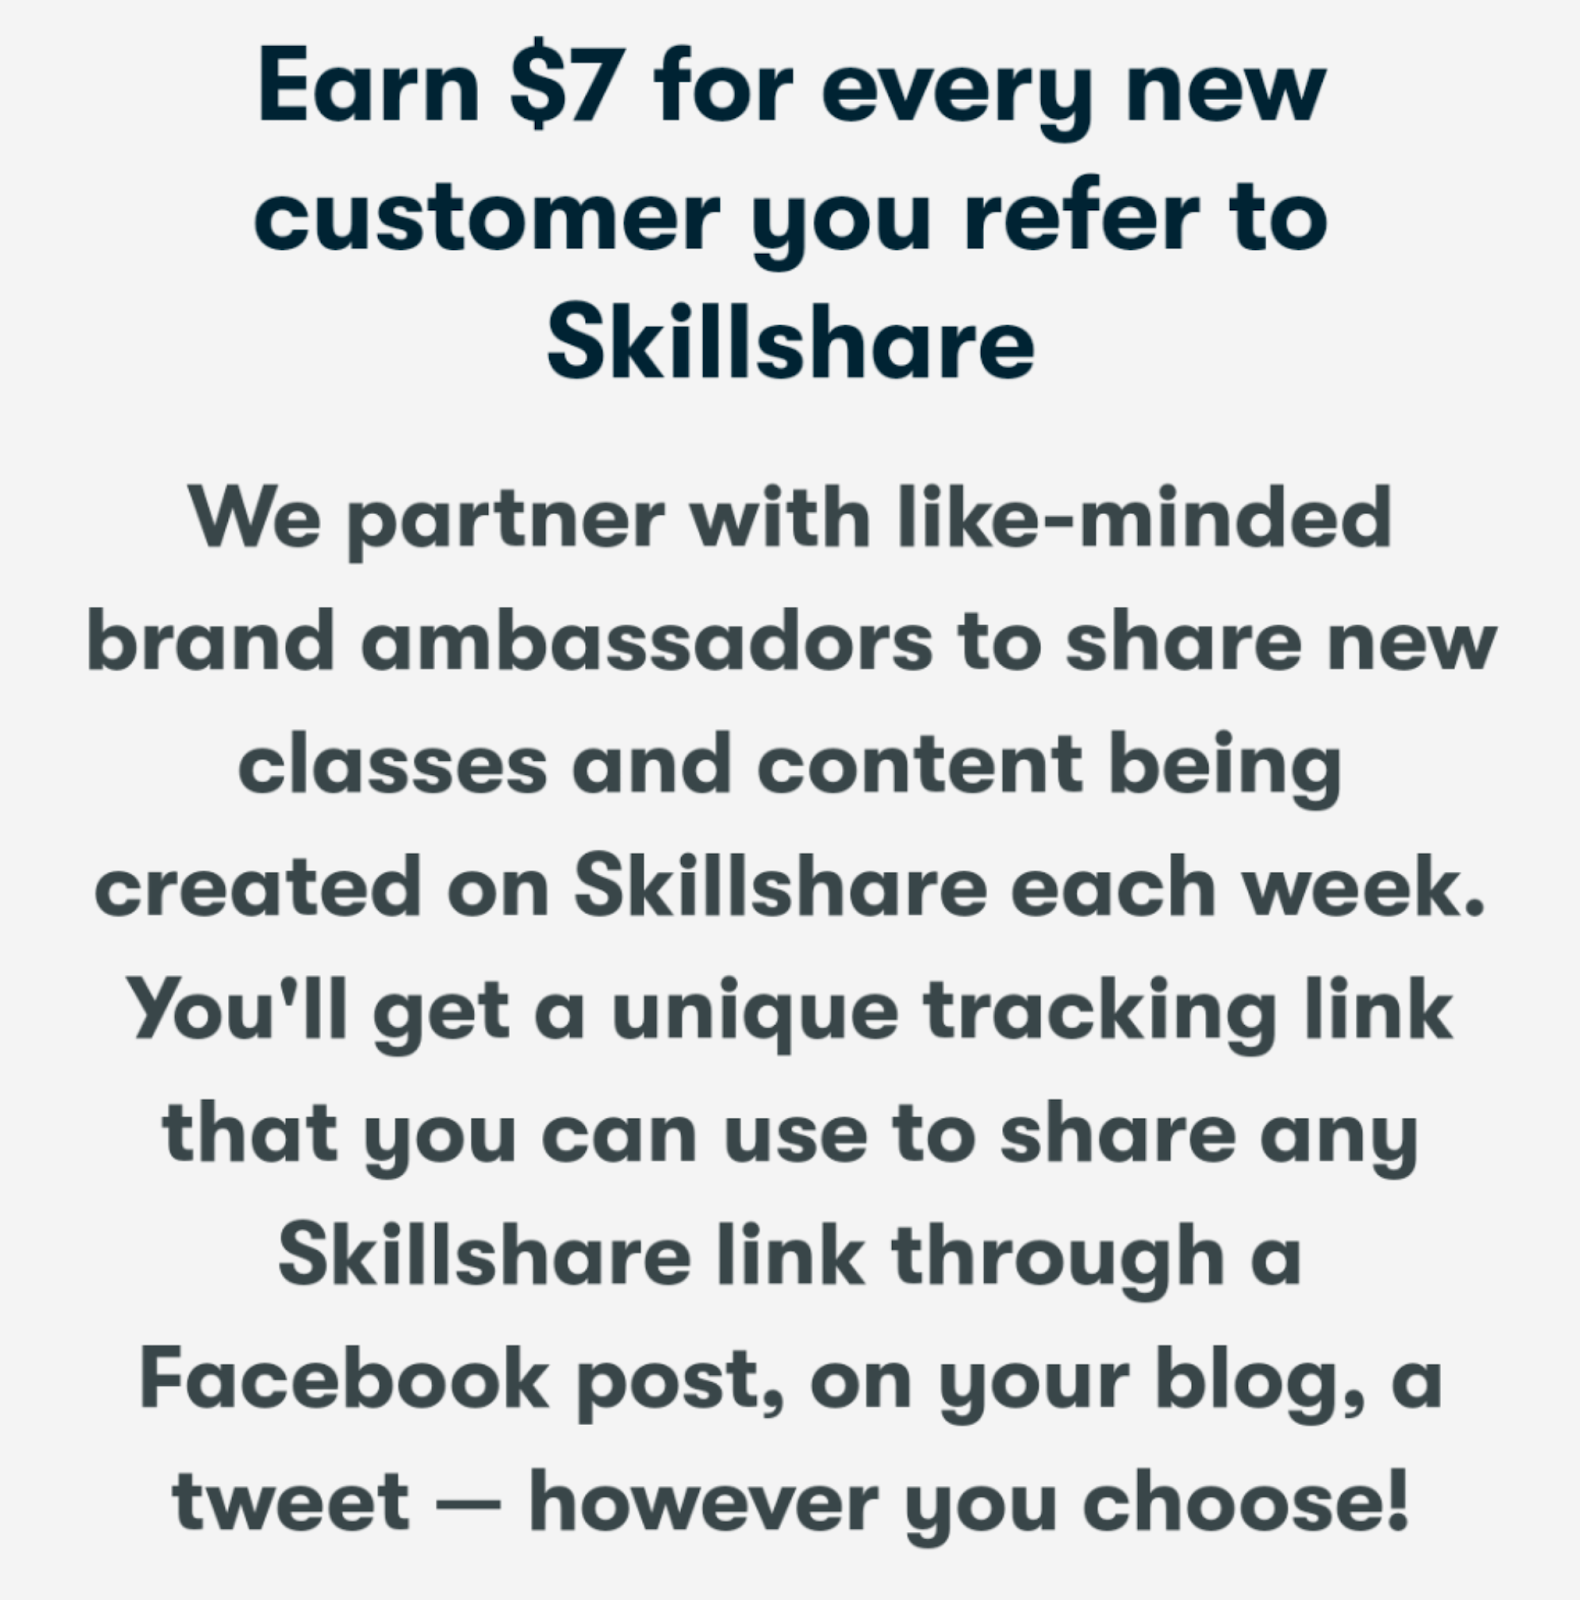 Skillshare affiliate marketing program benefits